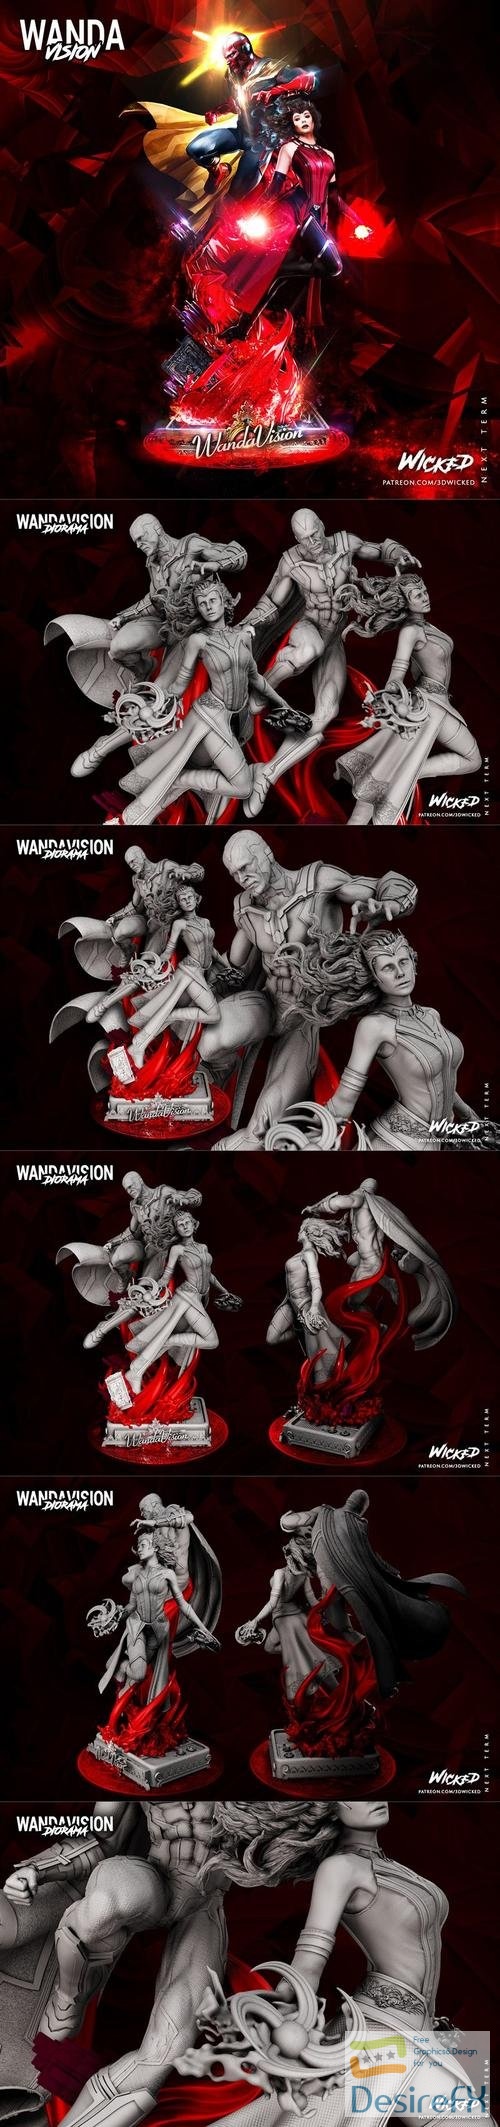 Wicked - Wanda and Visiom Sculpture Diorama – 3D Print